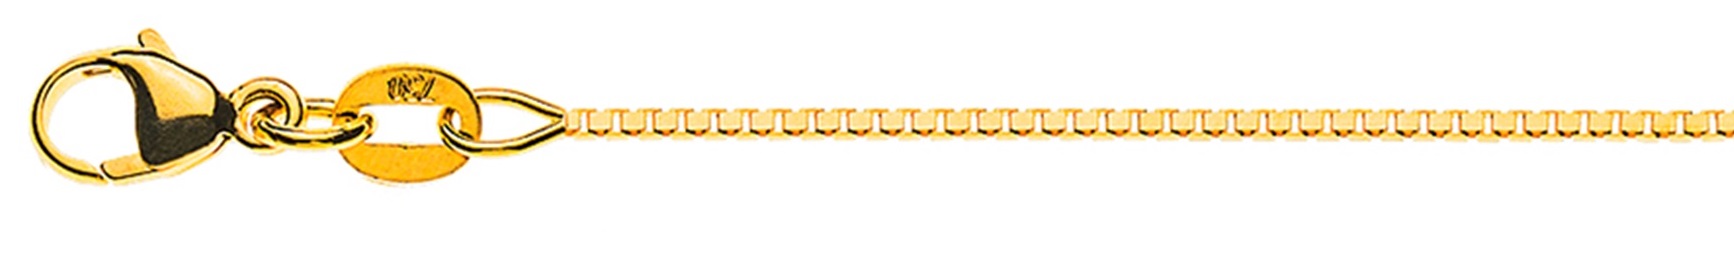 AURONOS Style Necklace yellow gold 9K Venetian chain diamond cut 40cm 0.9mm